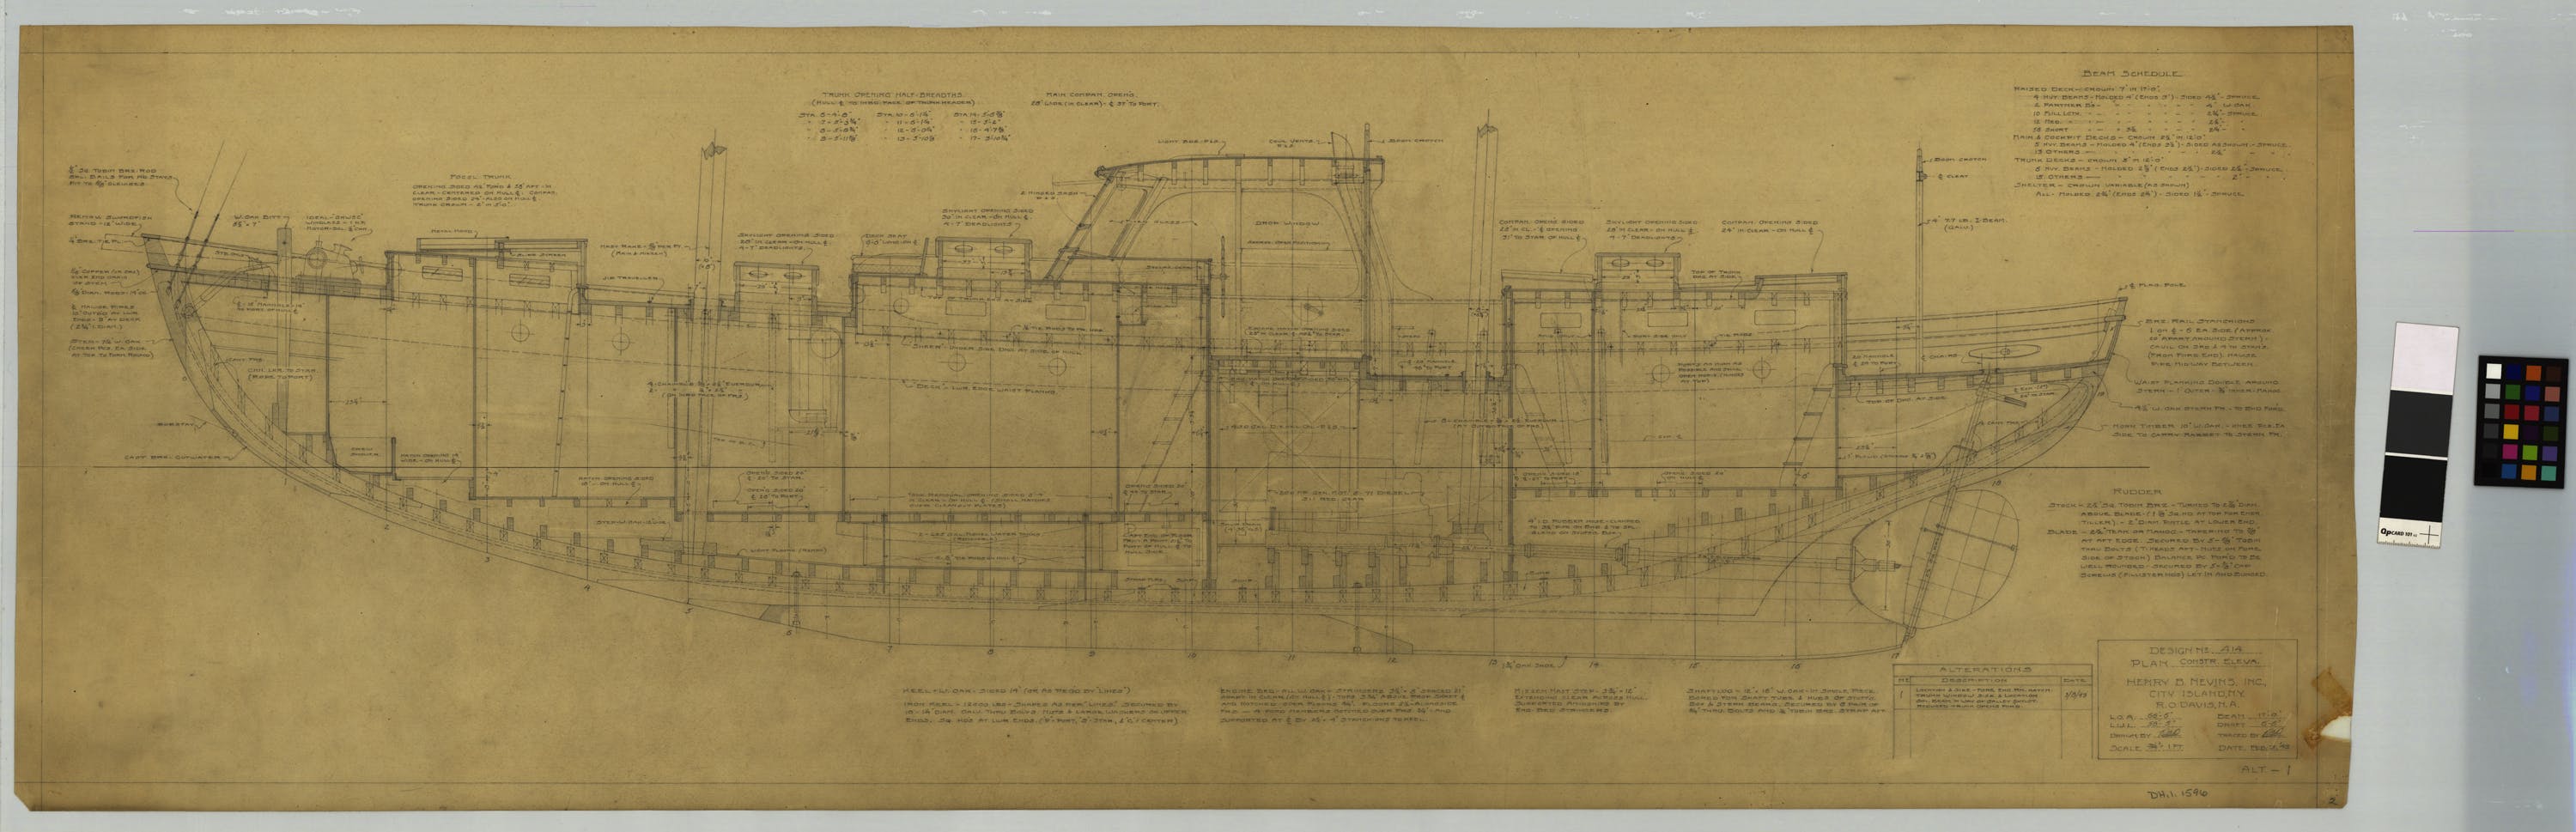 1949 boat construction elevation by Richard O. Davis